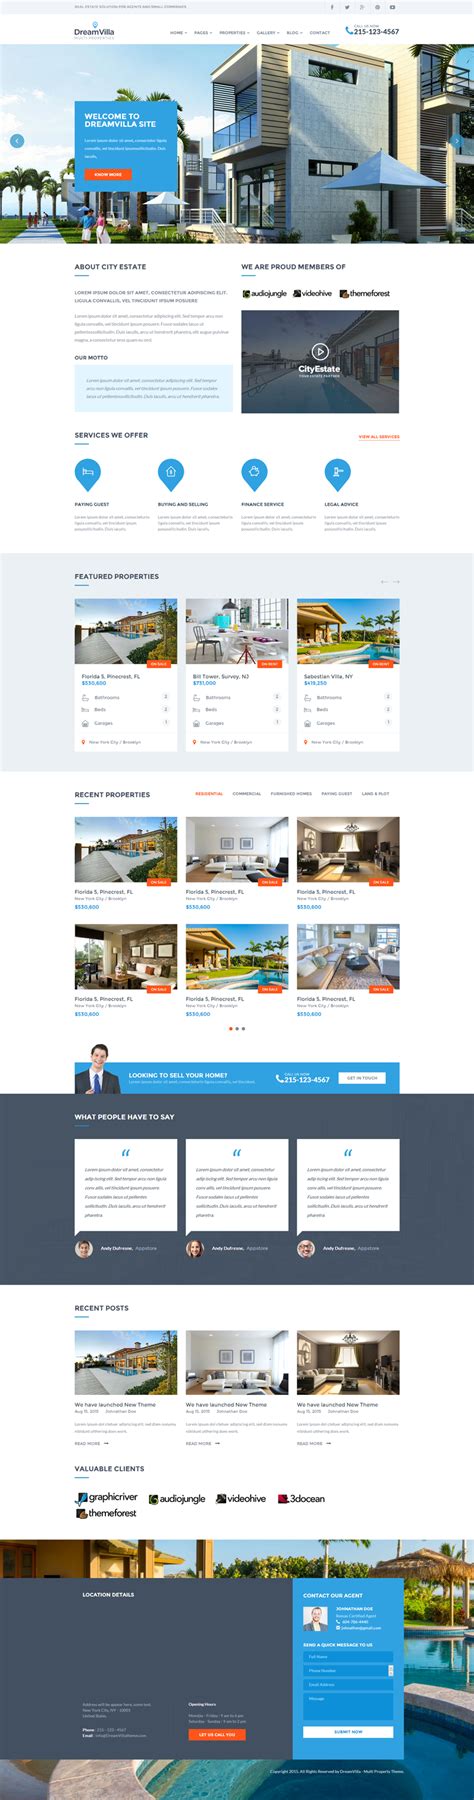 DreamVilla - 房产中介房地产官方网站HTML5模板